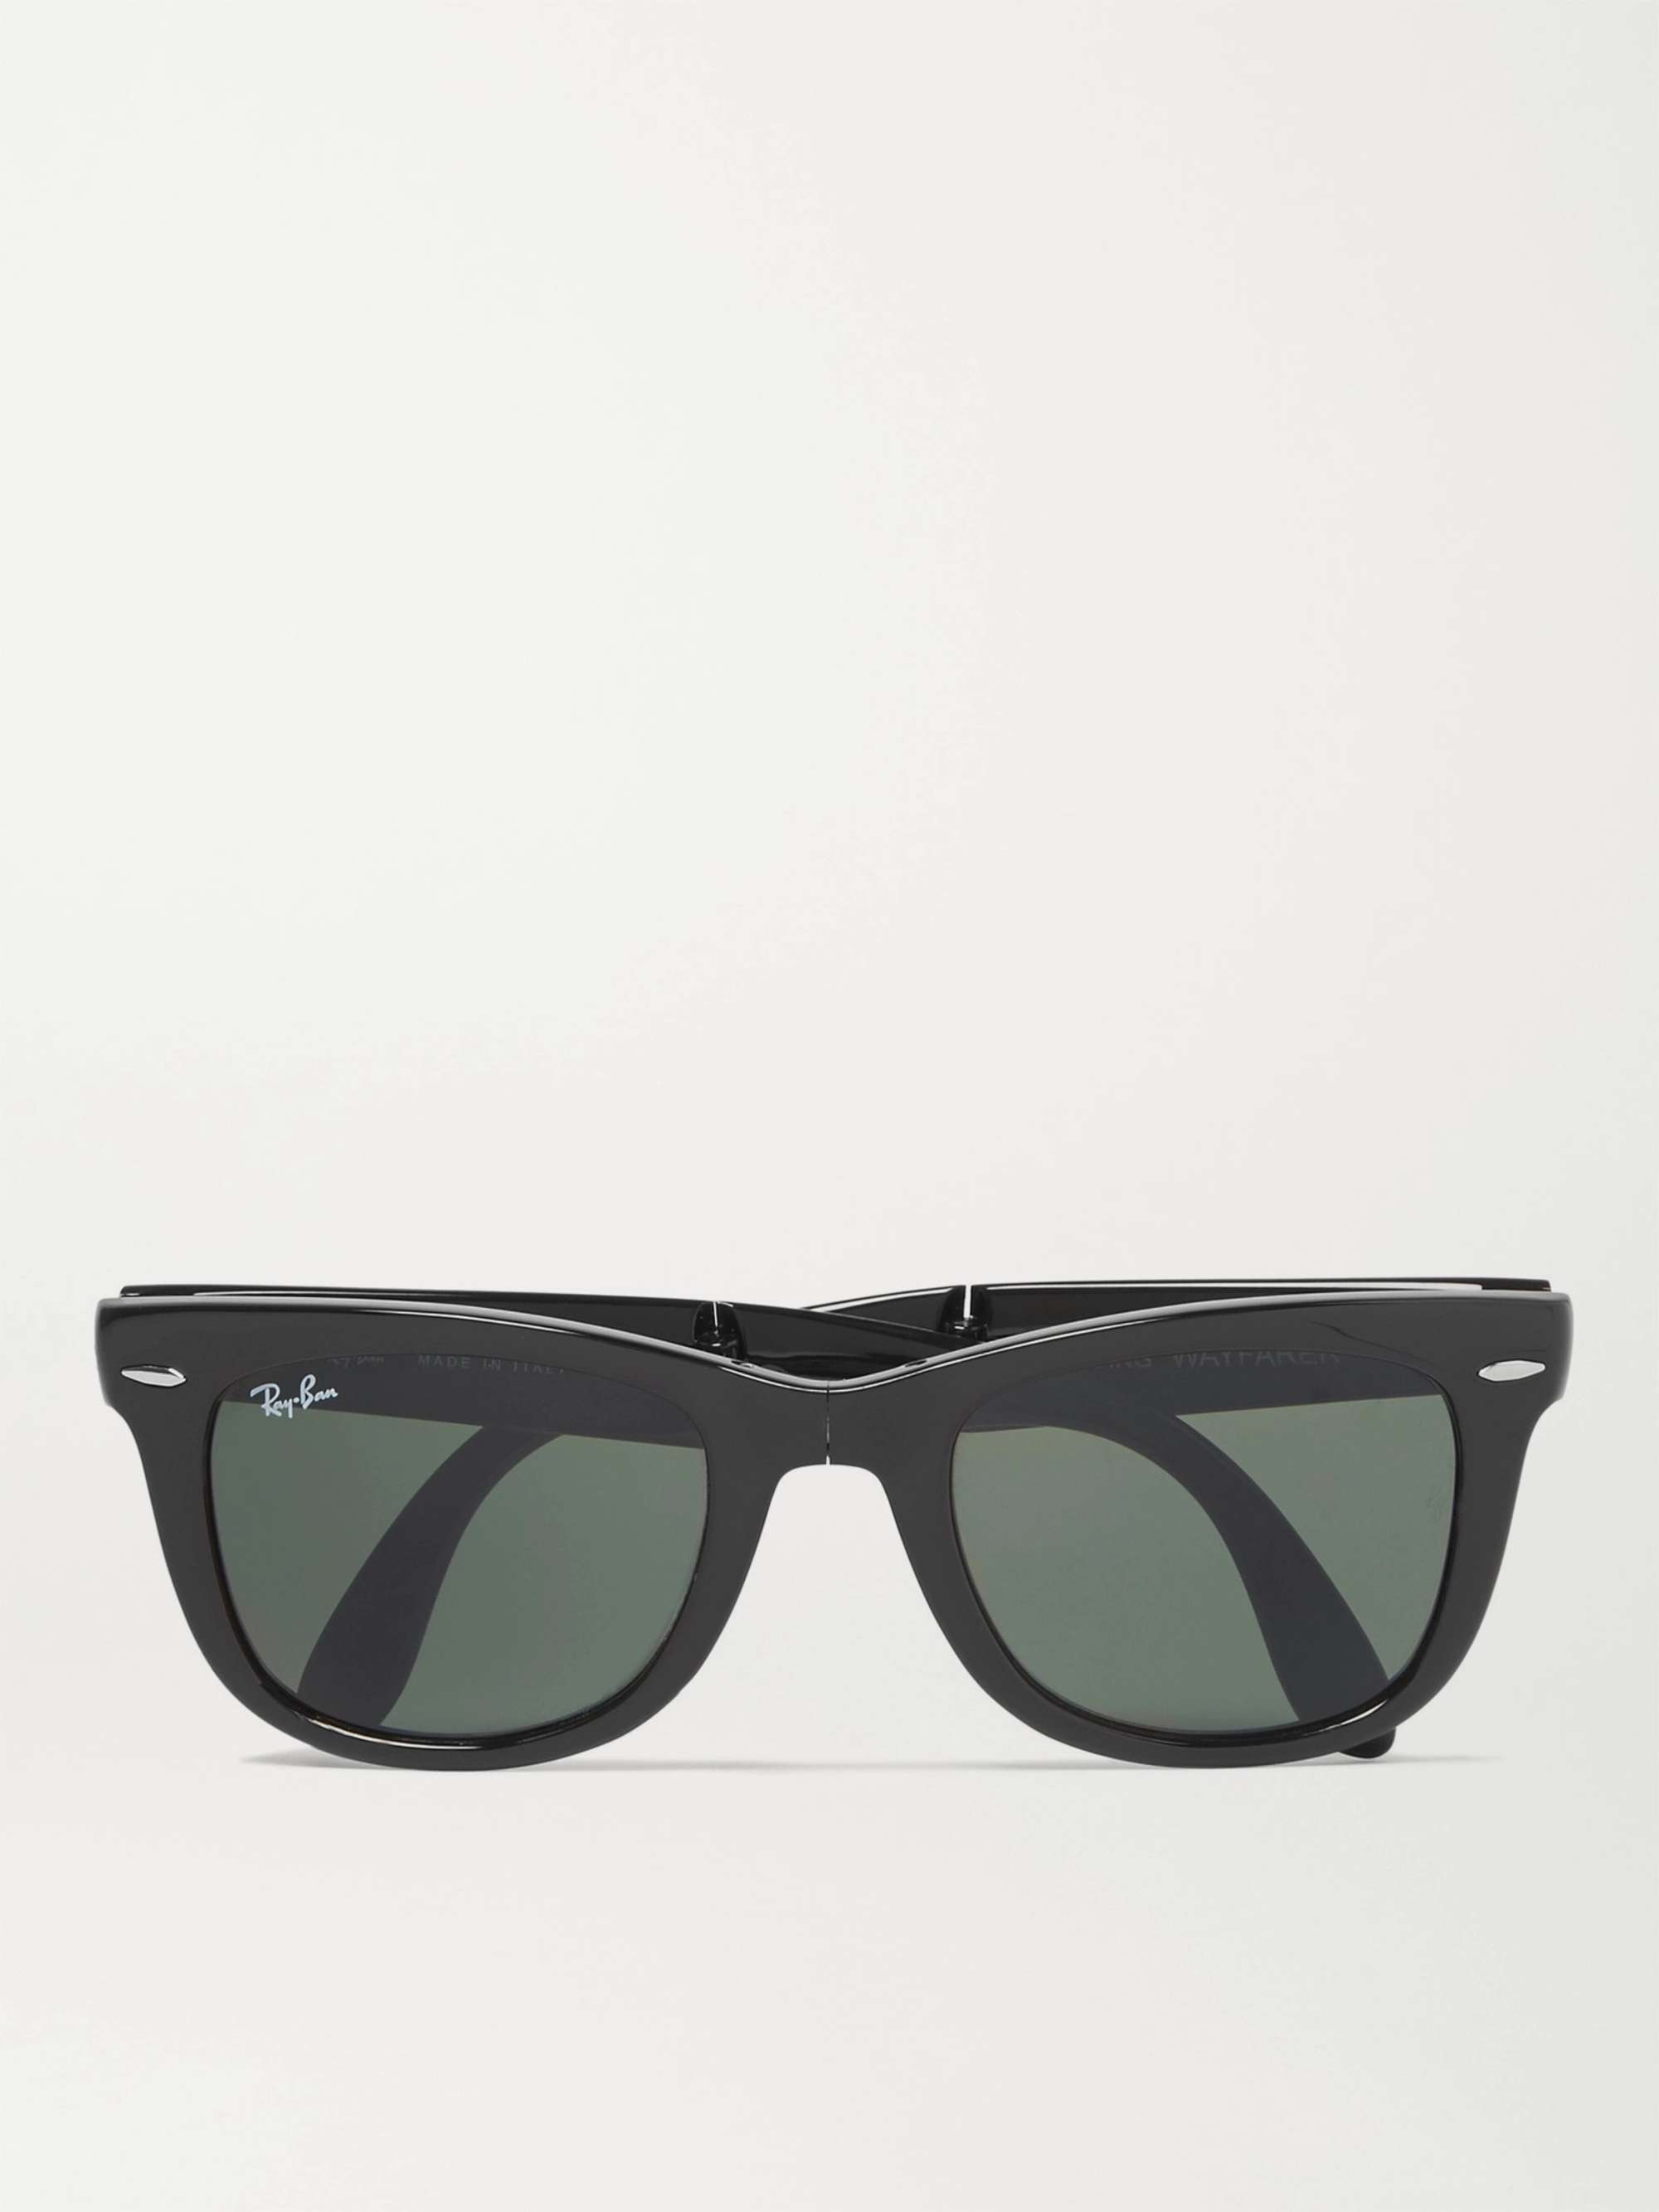 RAY-BAN Wayfarer Folding Sunglasses MR